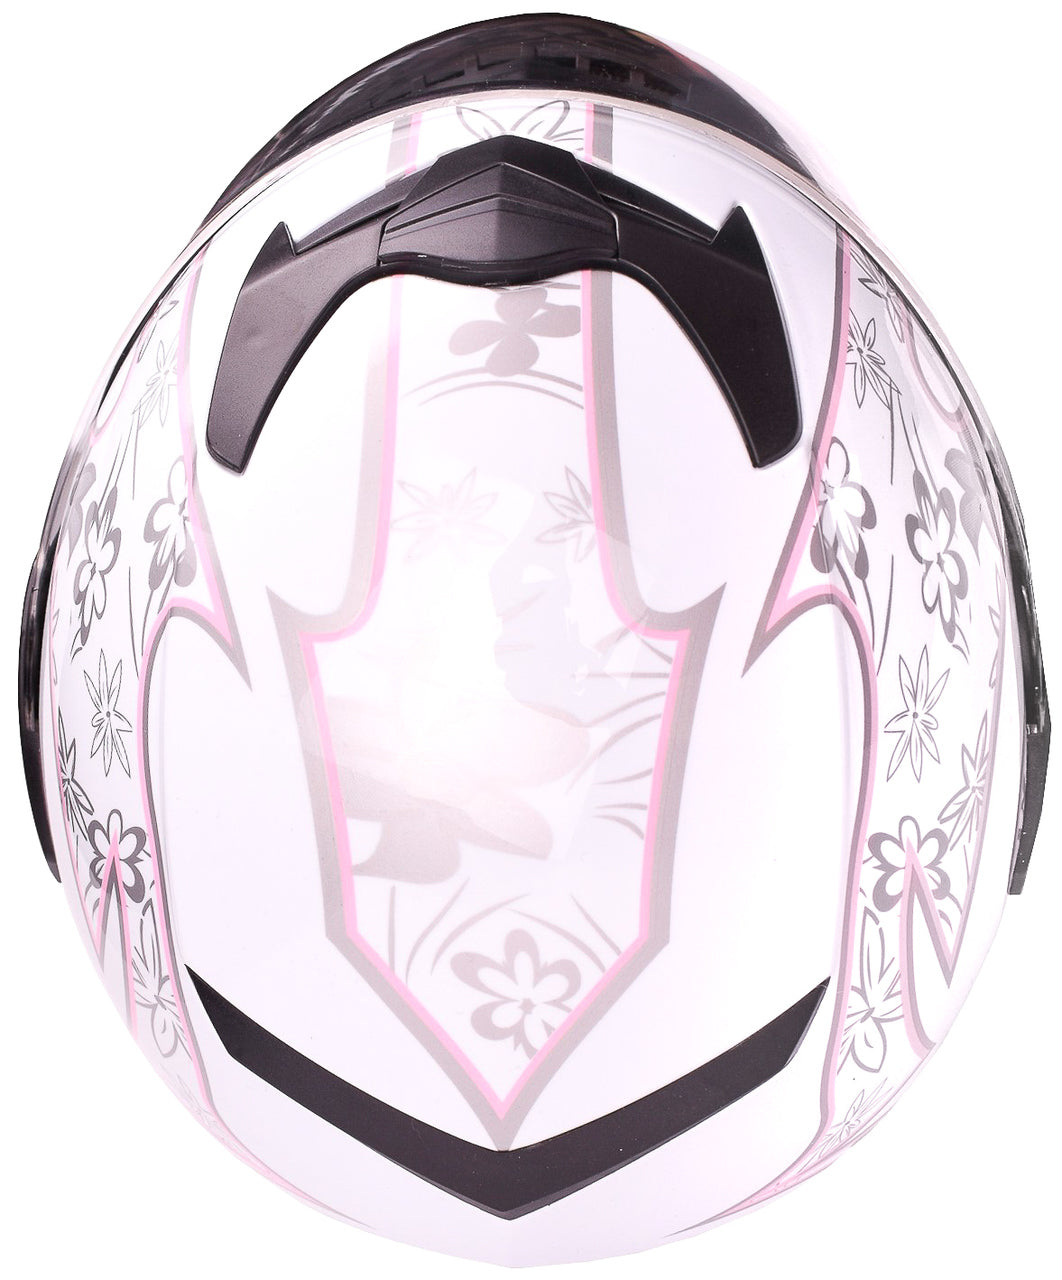 Women's Full Face Motorcycle Helmet - Pink & White Dragons Breath